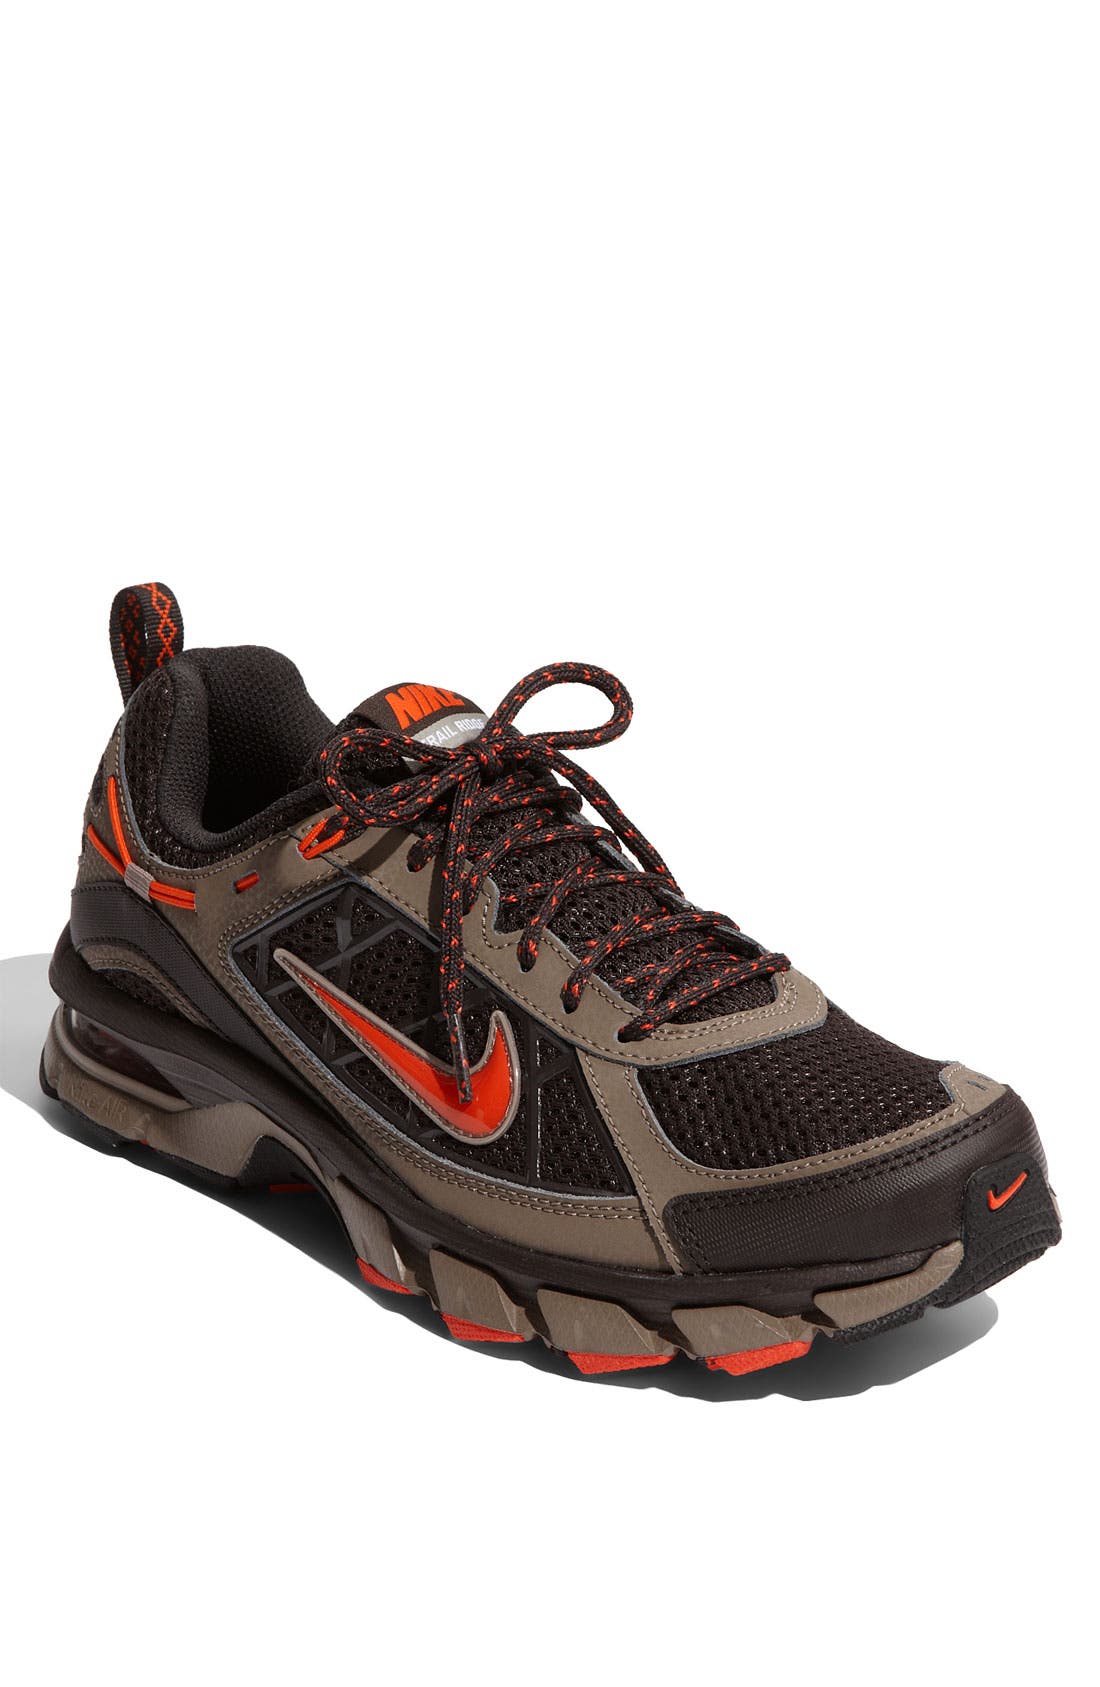 nike air trail running shoes